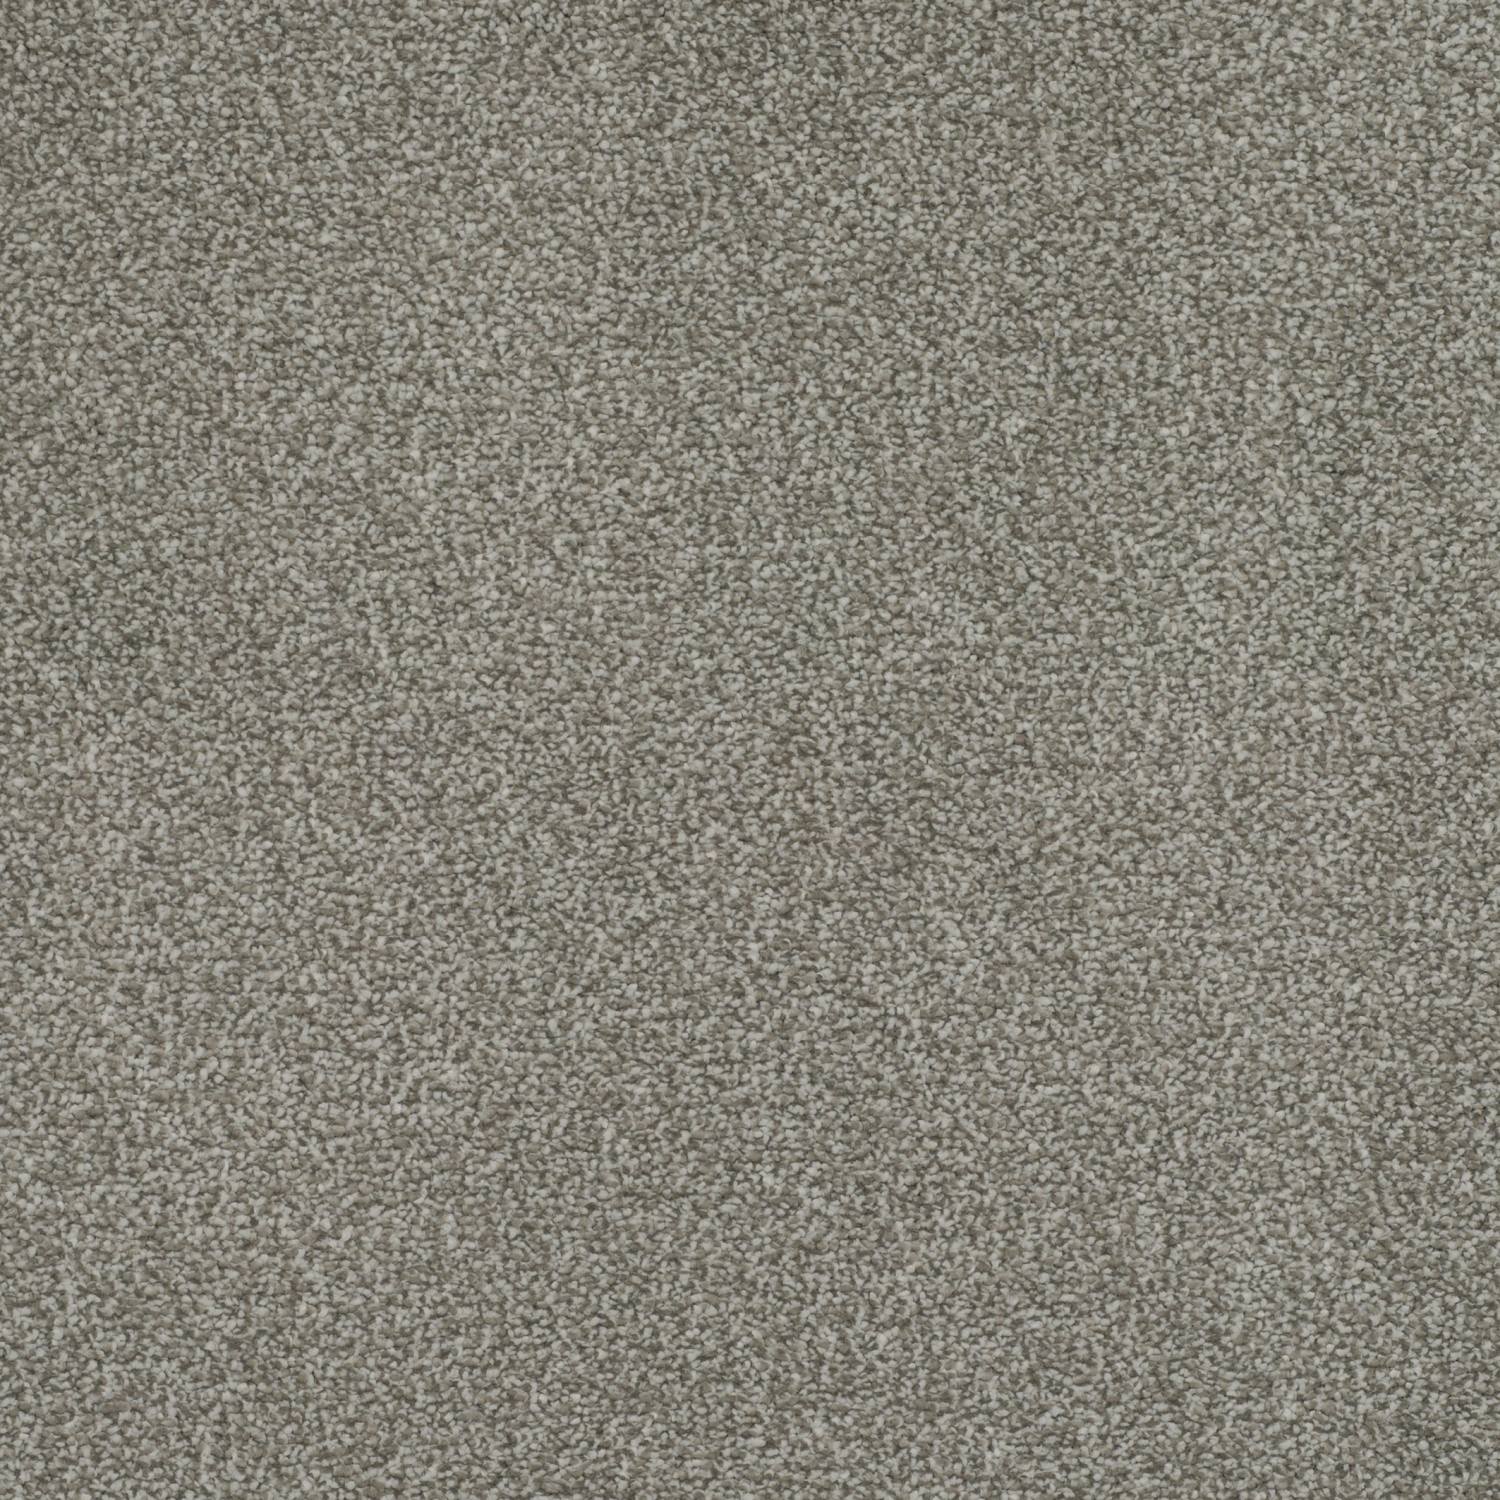 Obsession Twist Luxury Deep Pile Carpet - 184 Agate Grey